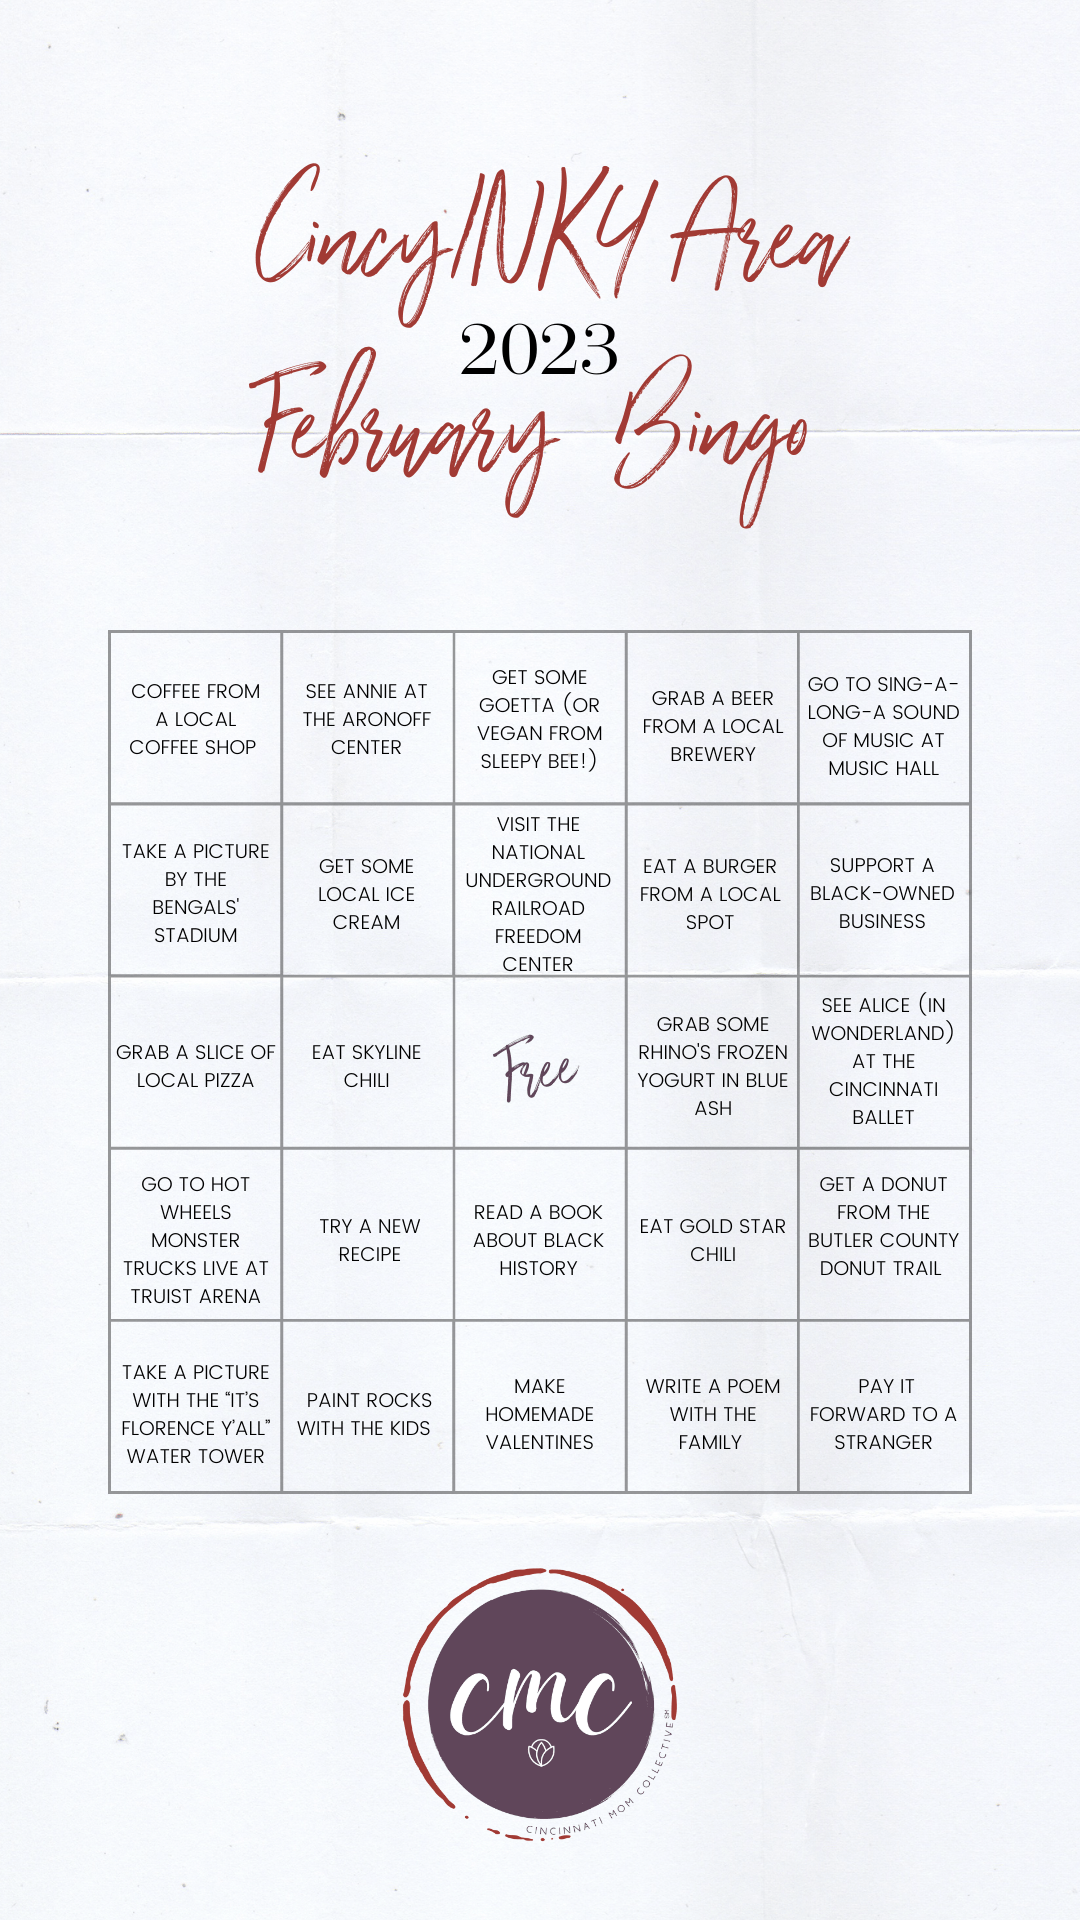 February 2023 cincinnati Bingo with prizes